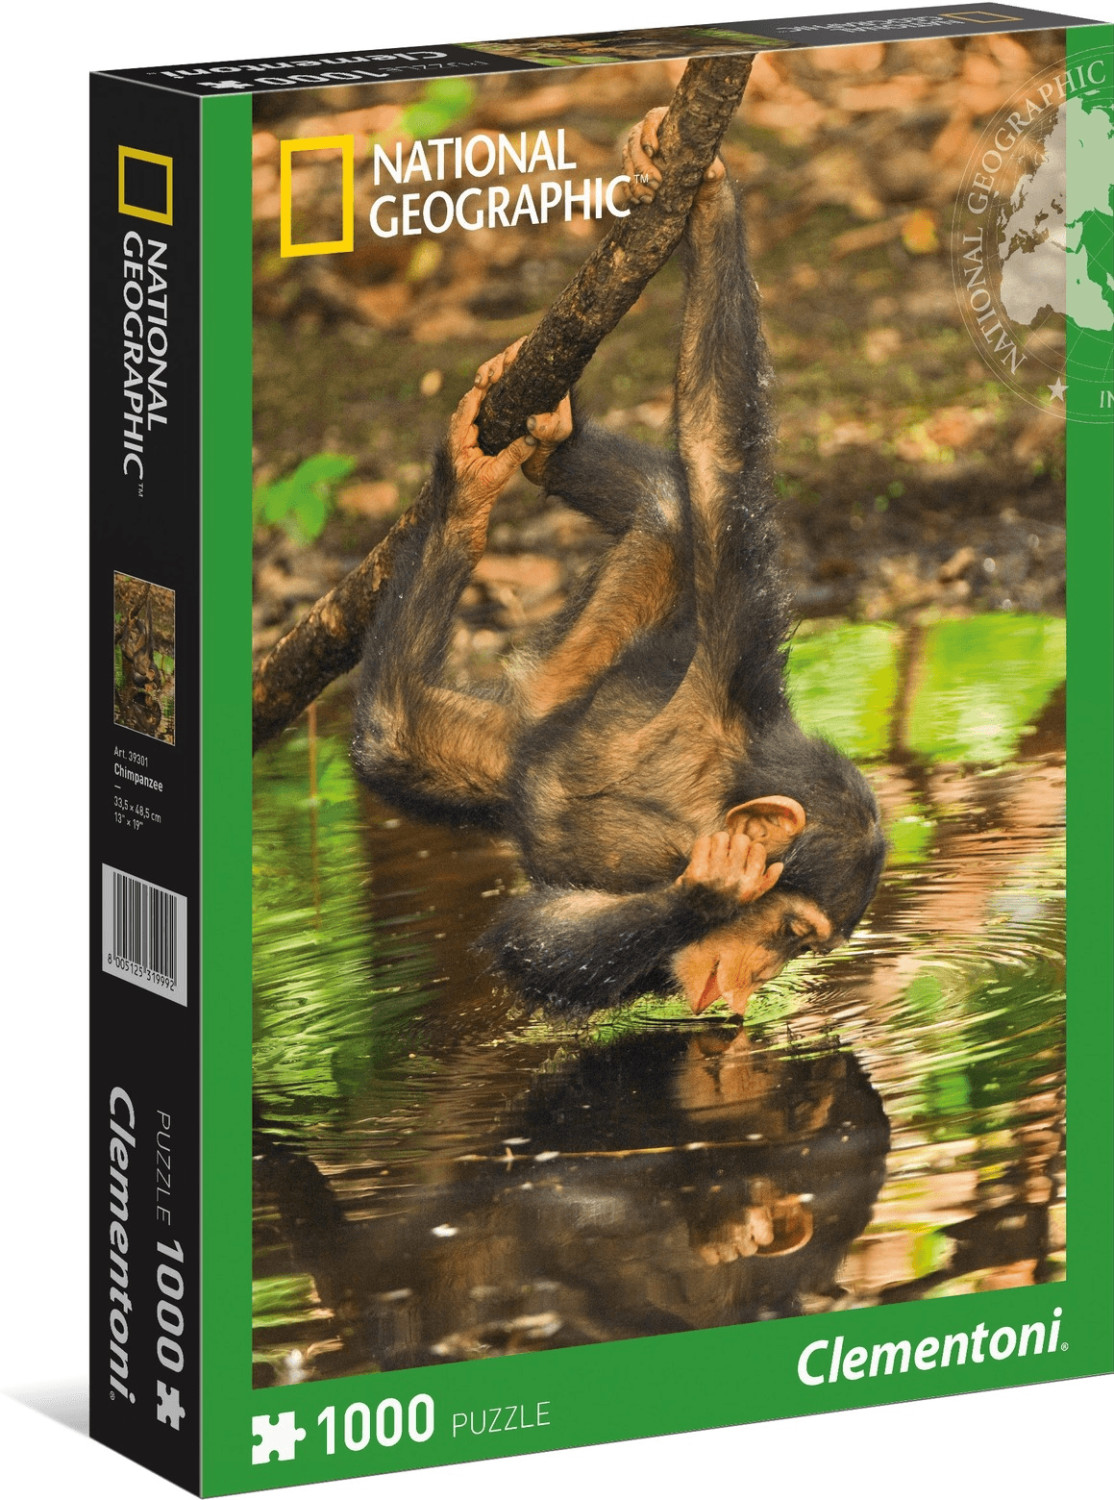 Clementoni Chimpanzee Infant - 1000 pcs - National Geographic